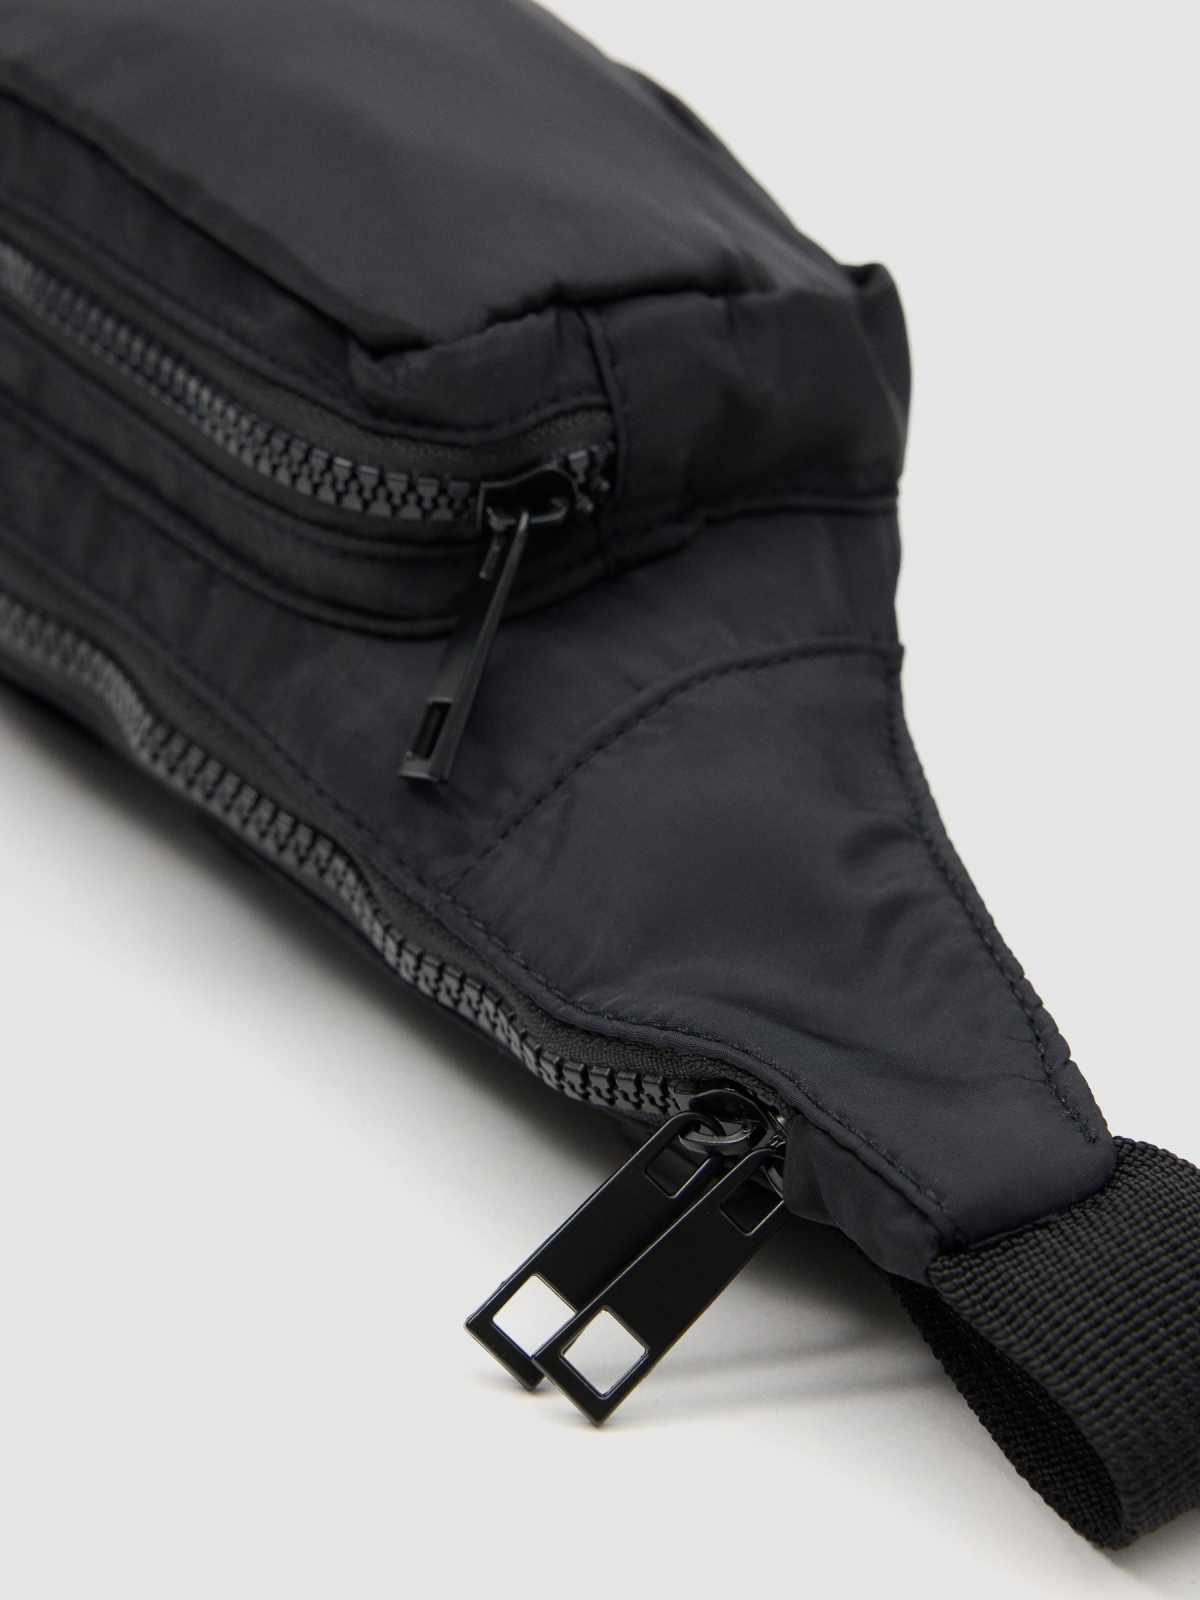 Nylon bum bag black detail view